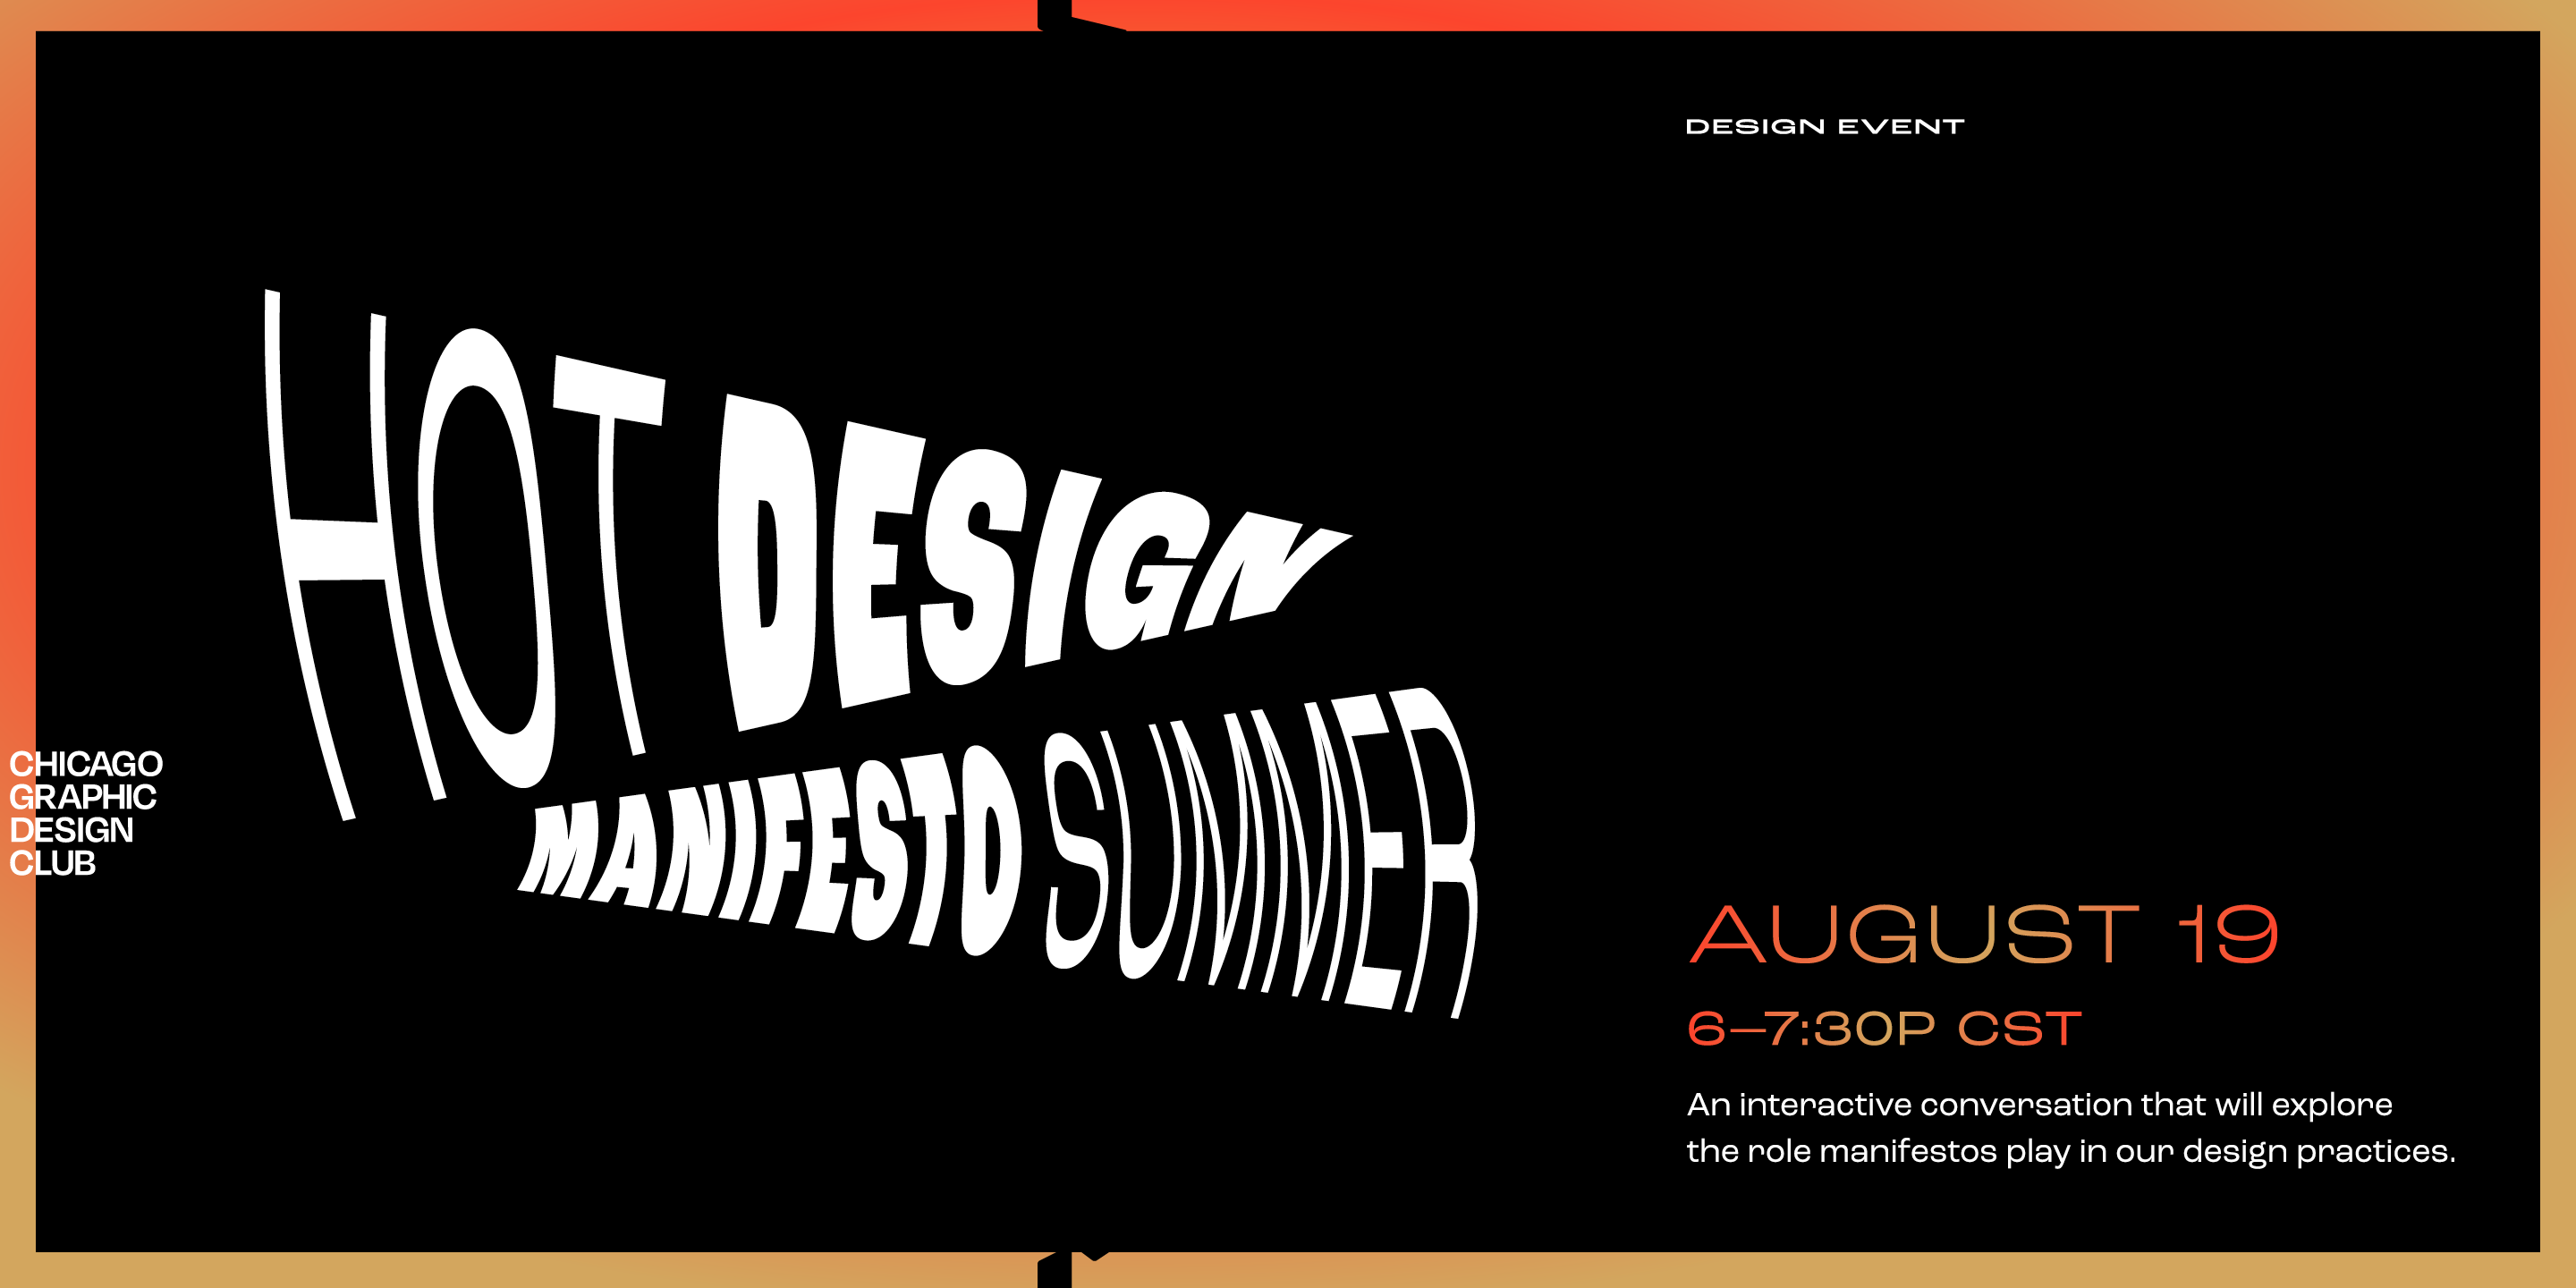 Hot Design Manifesto Summer | An Interactive Conversation